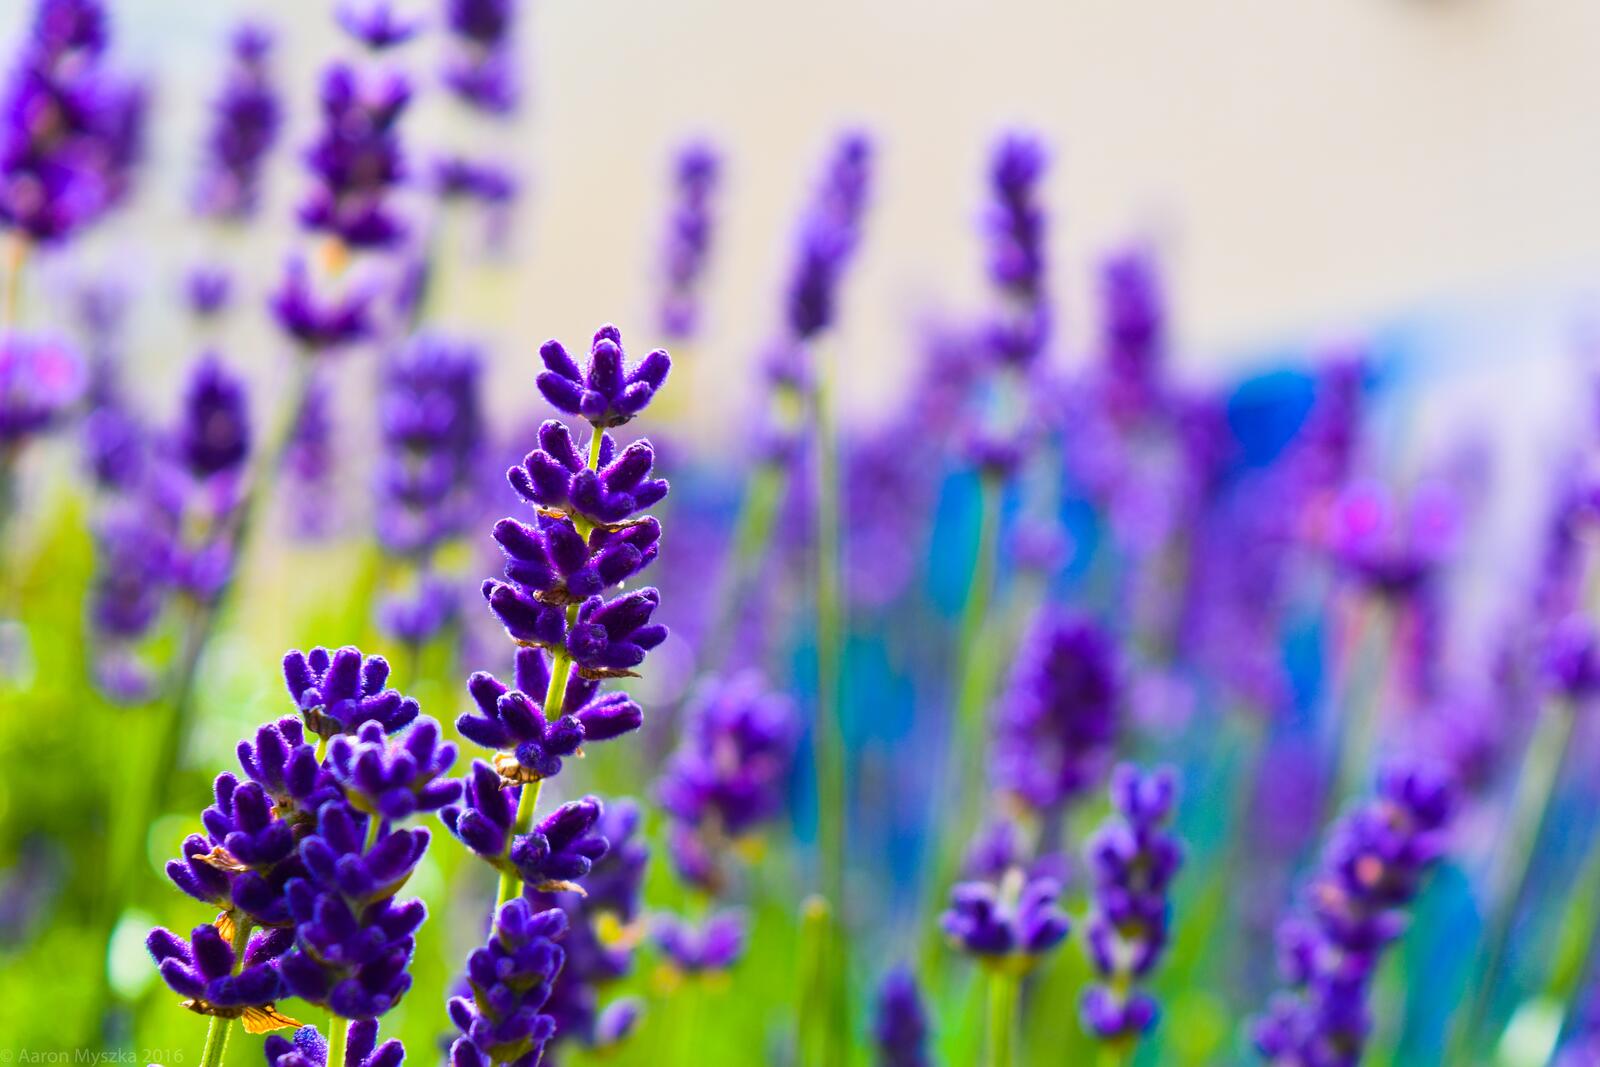 Free photo A field of purple lavender